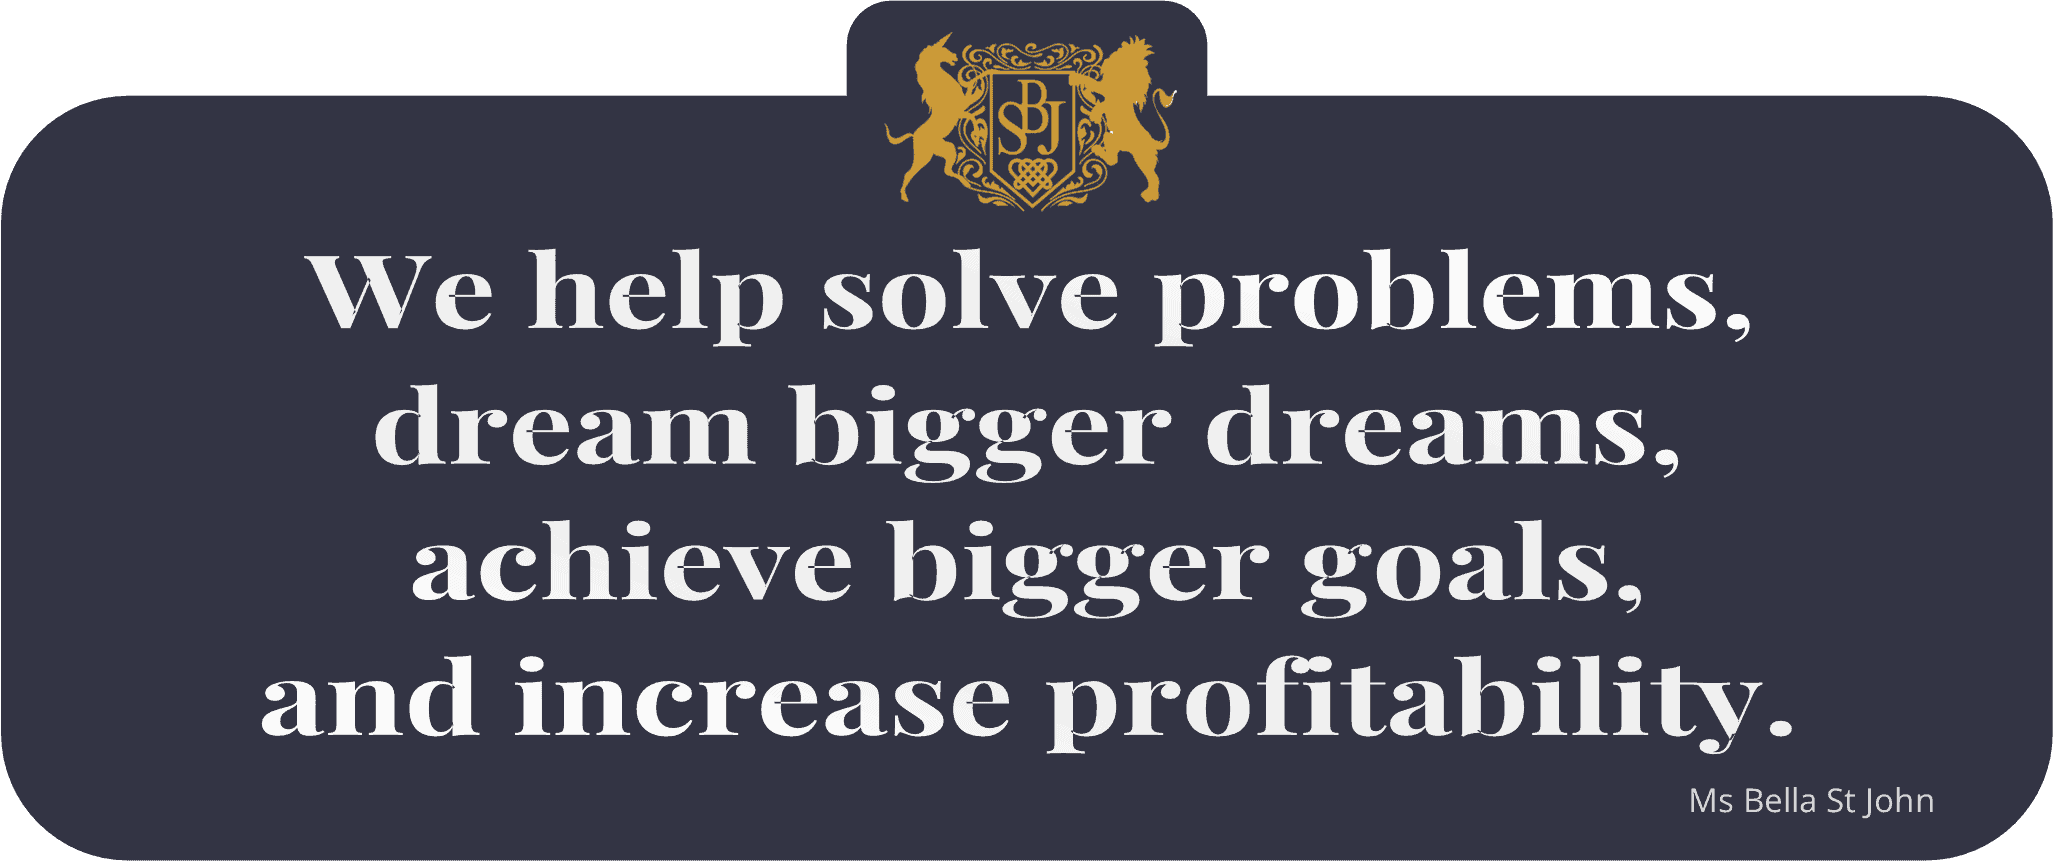 We help solve problems, dream bigger dreams, achieve bigger goals, and increase profitability - Ms Bella St John.